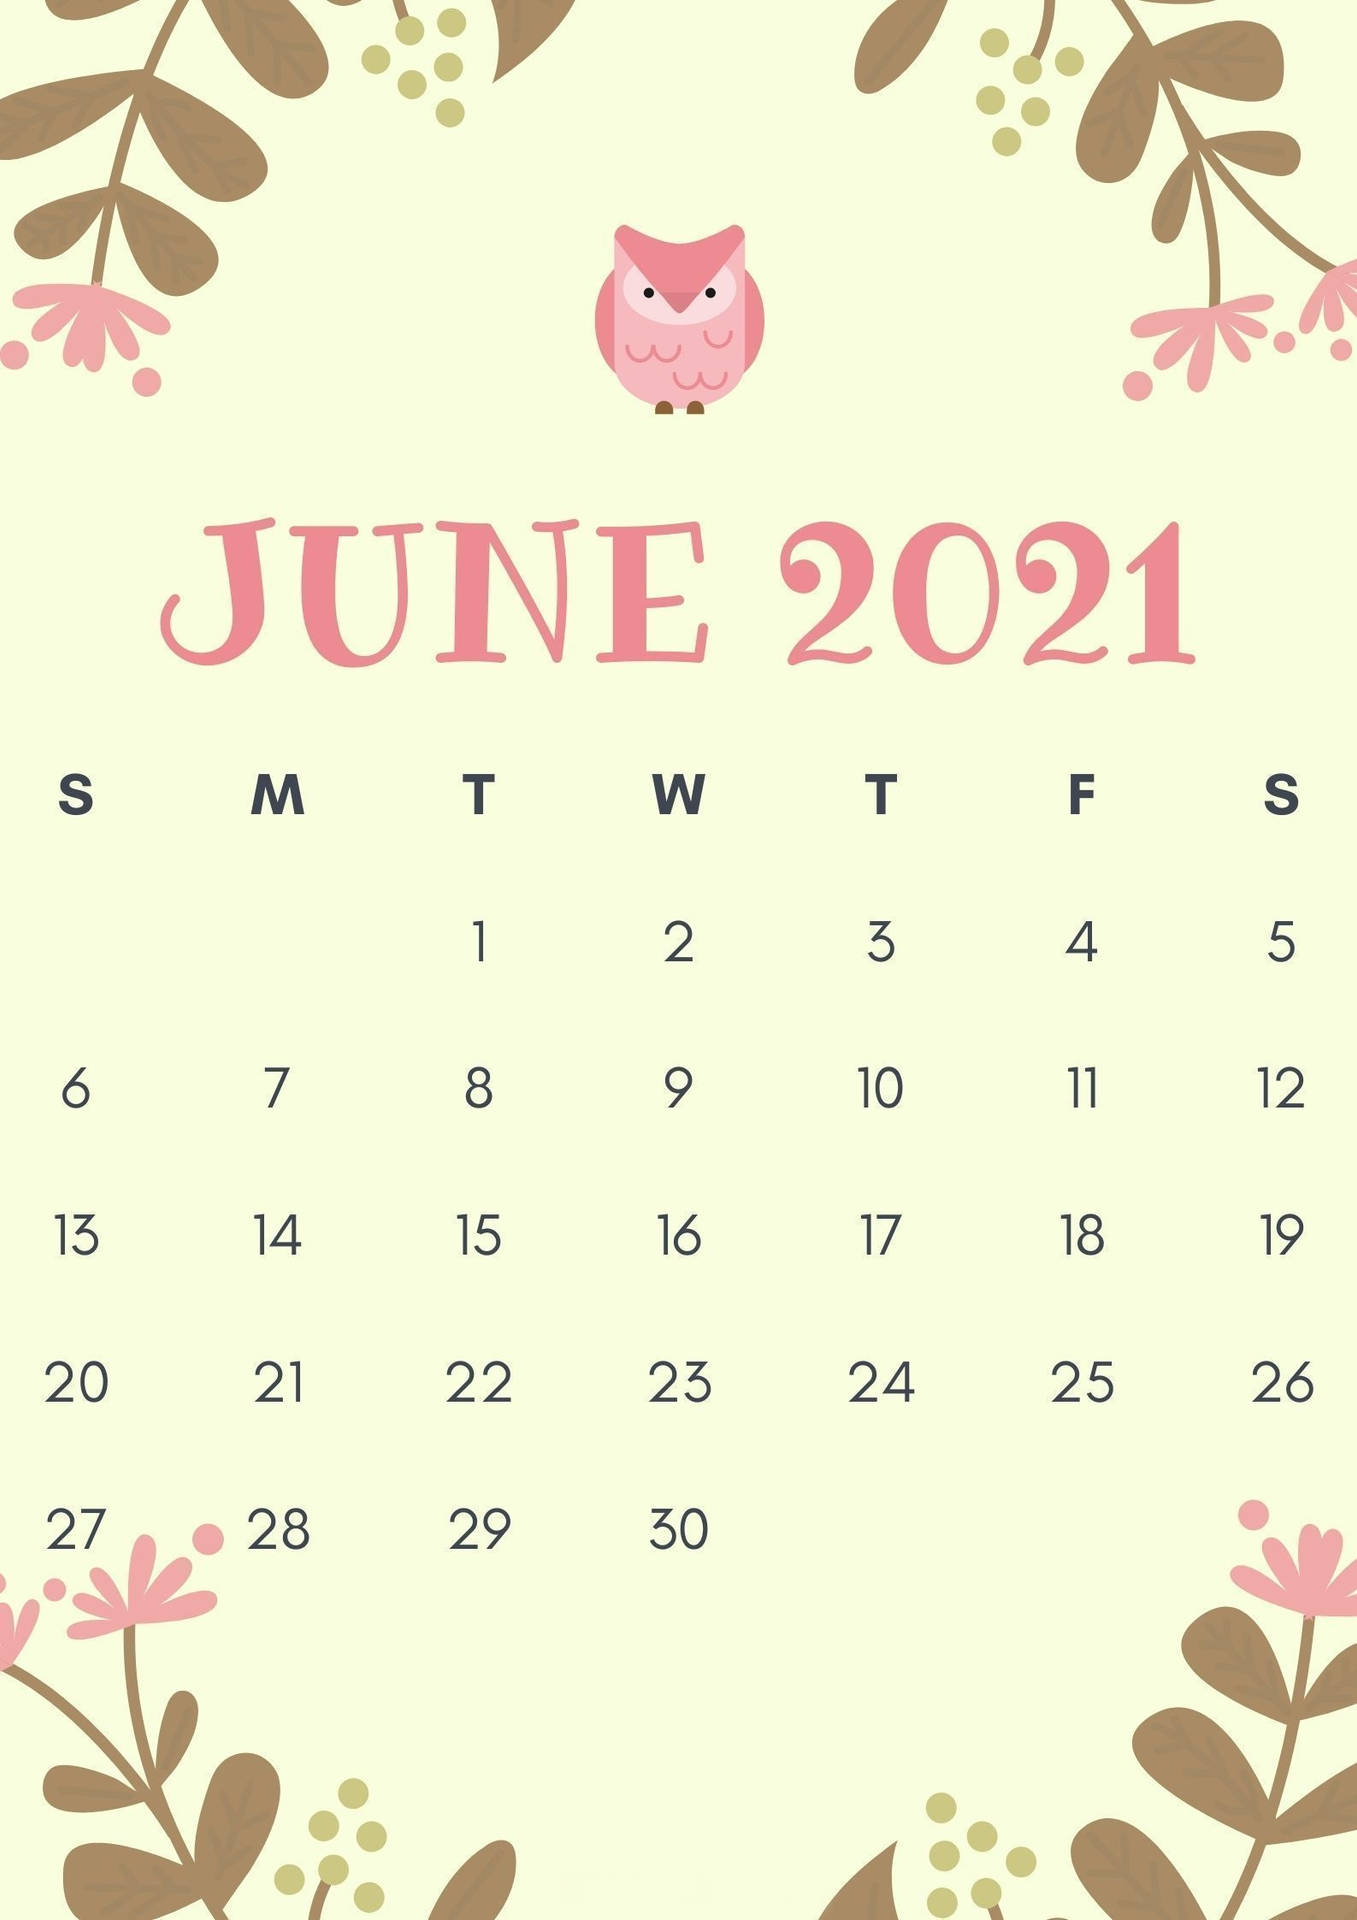 Cool June 2021 Calendar Wallpaper